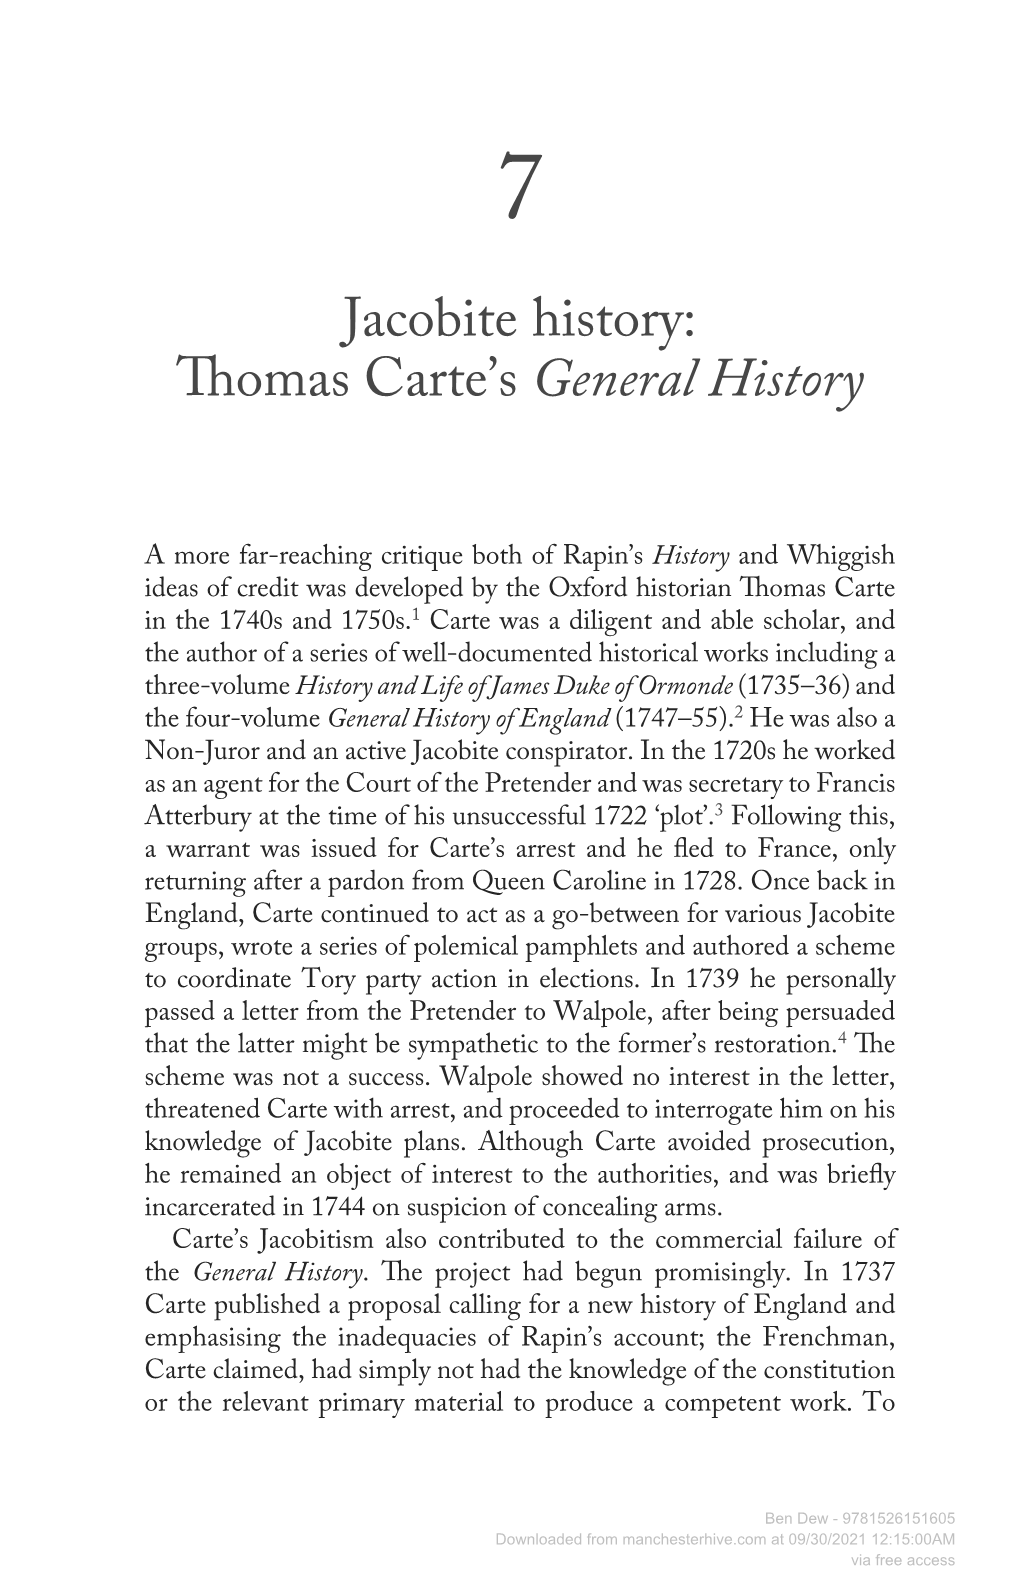 Thomas Carte's General History